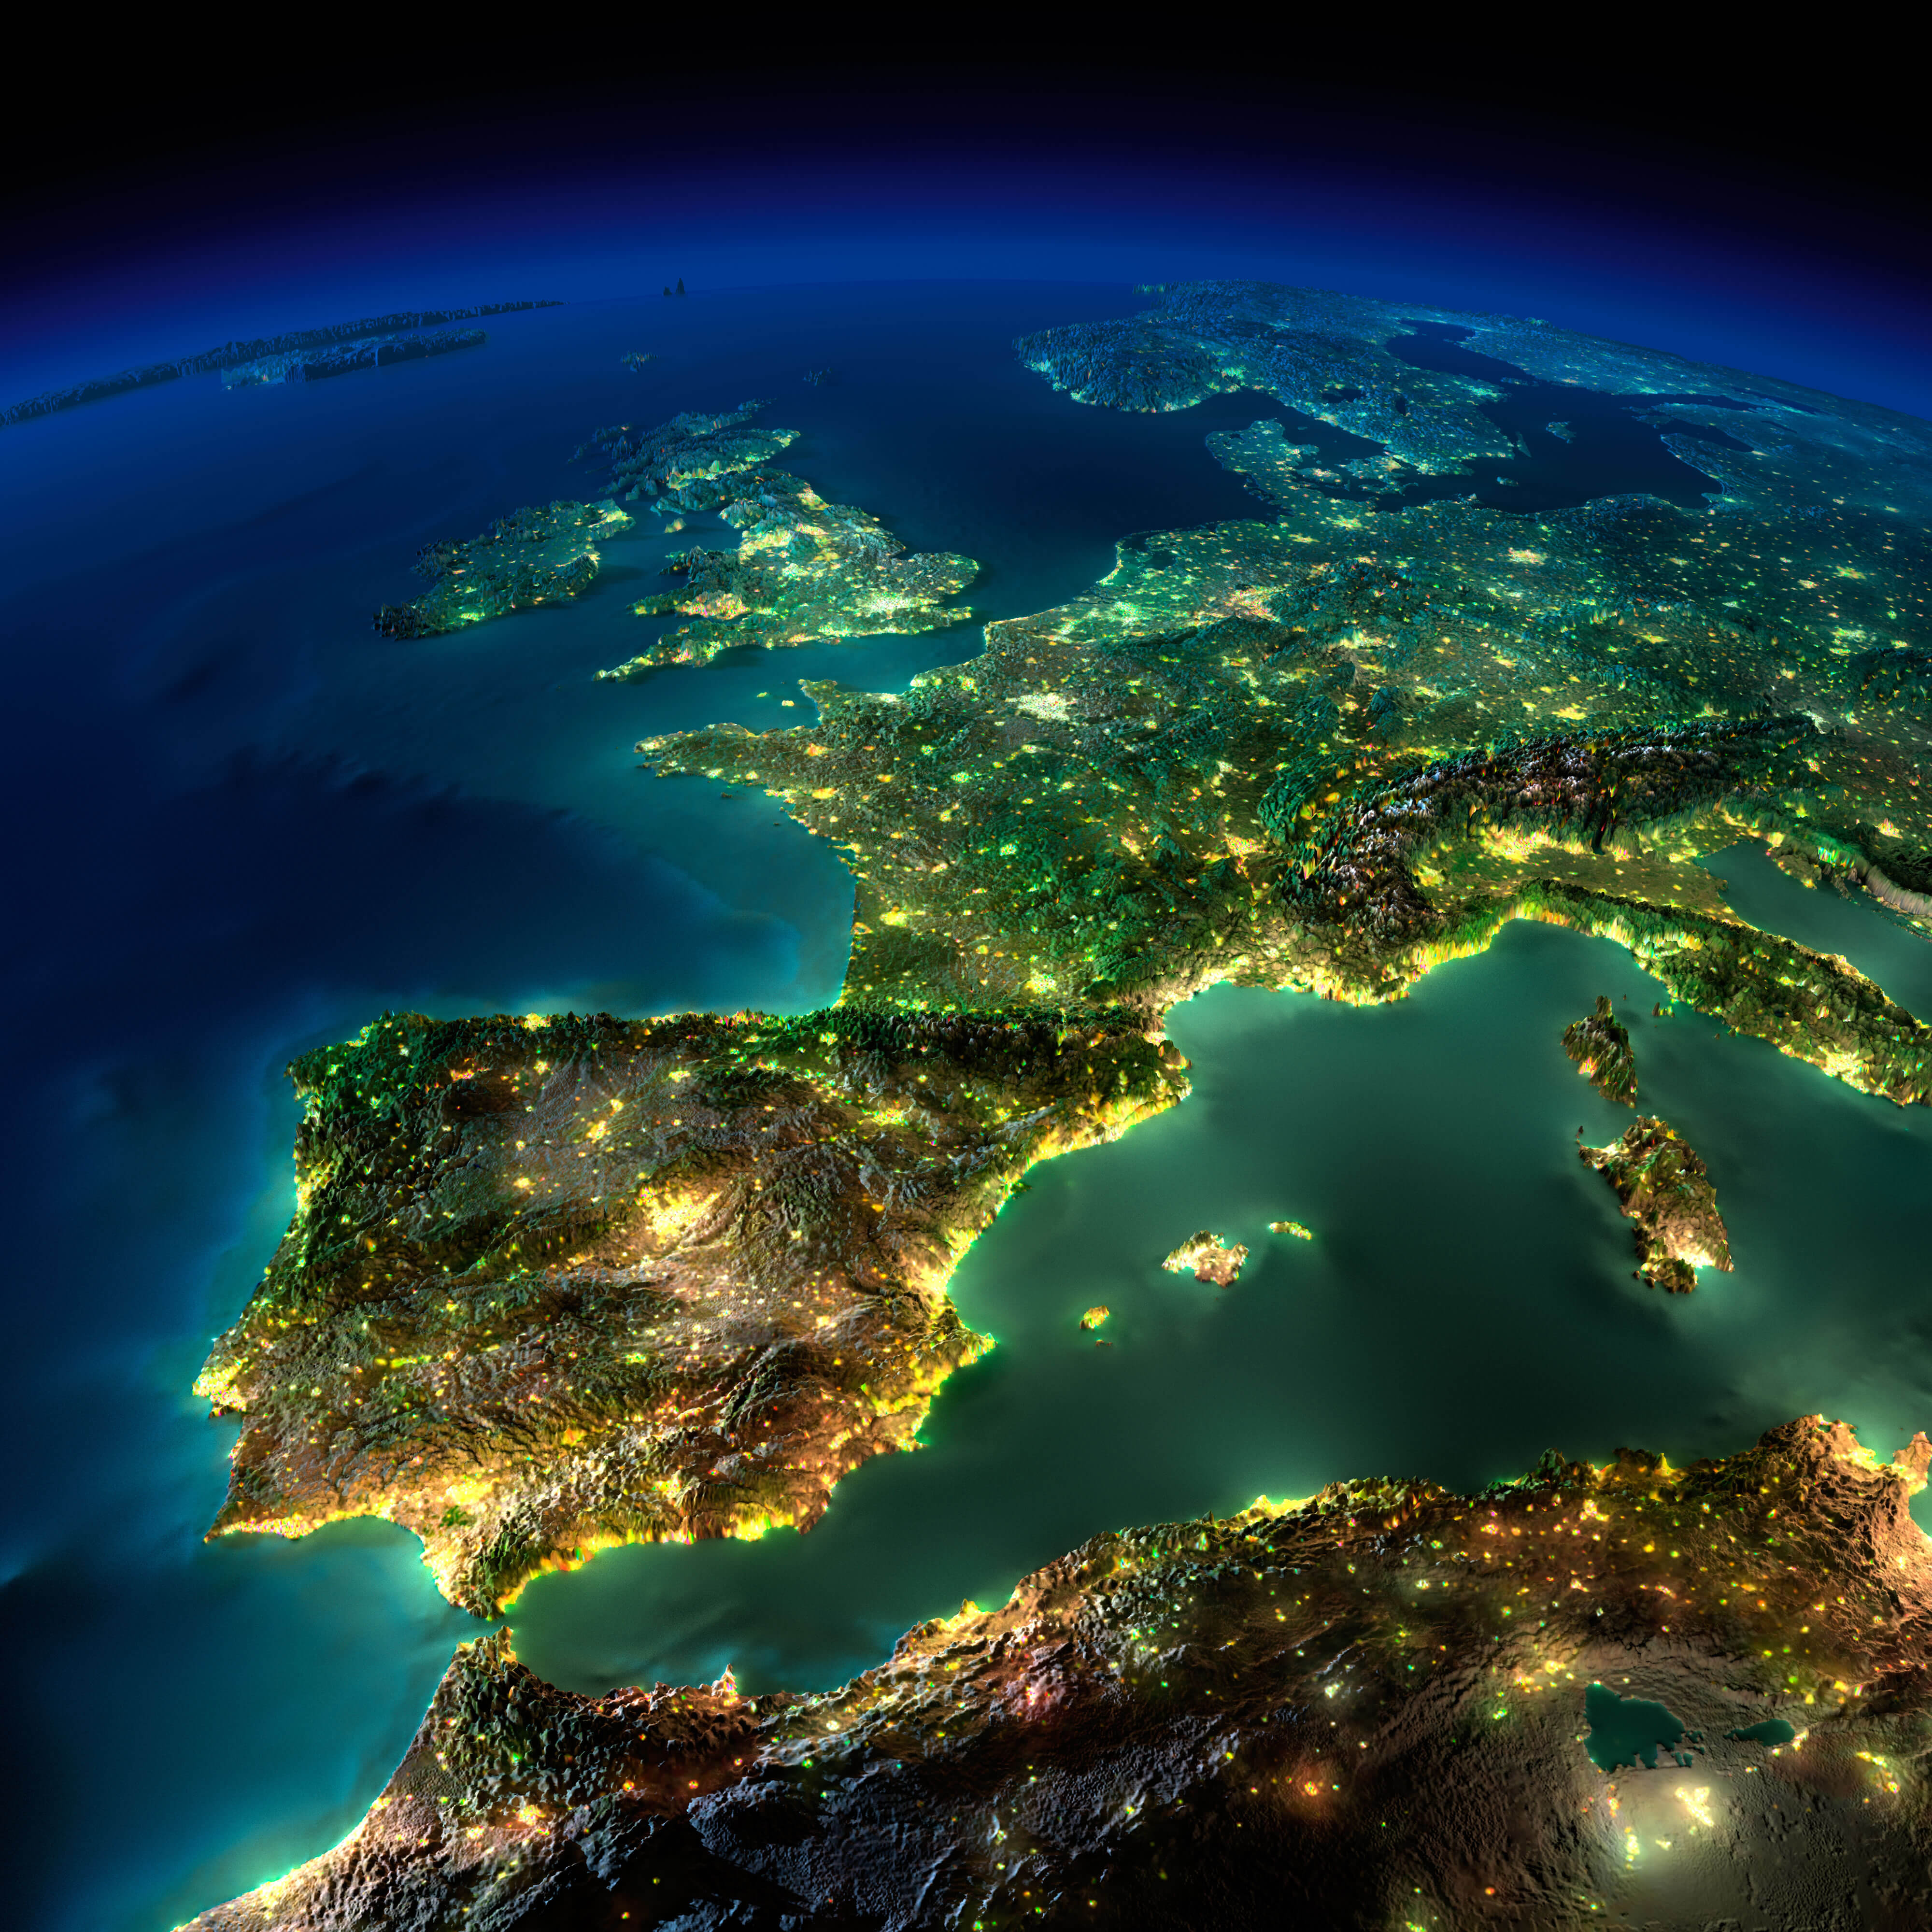 Spain & Europe Satellite Image with Moonlight